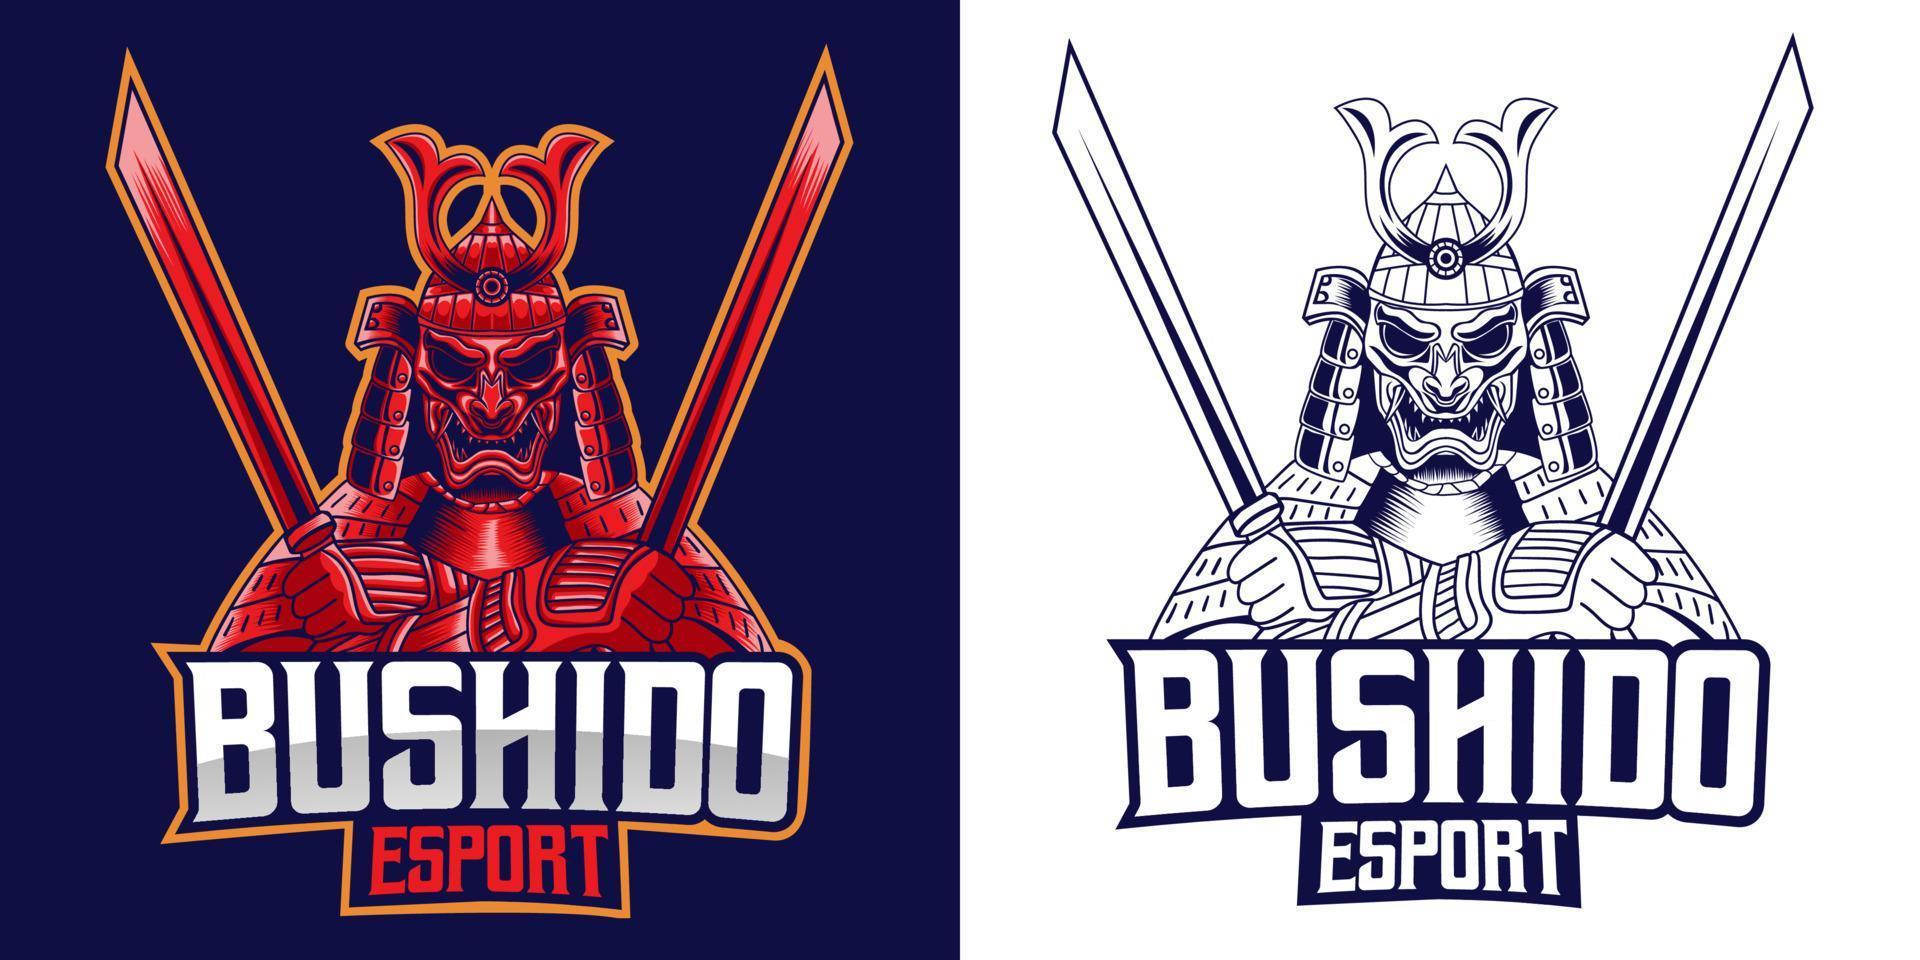 design de mascote do logotipo do bushido esport vetor